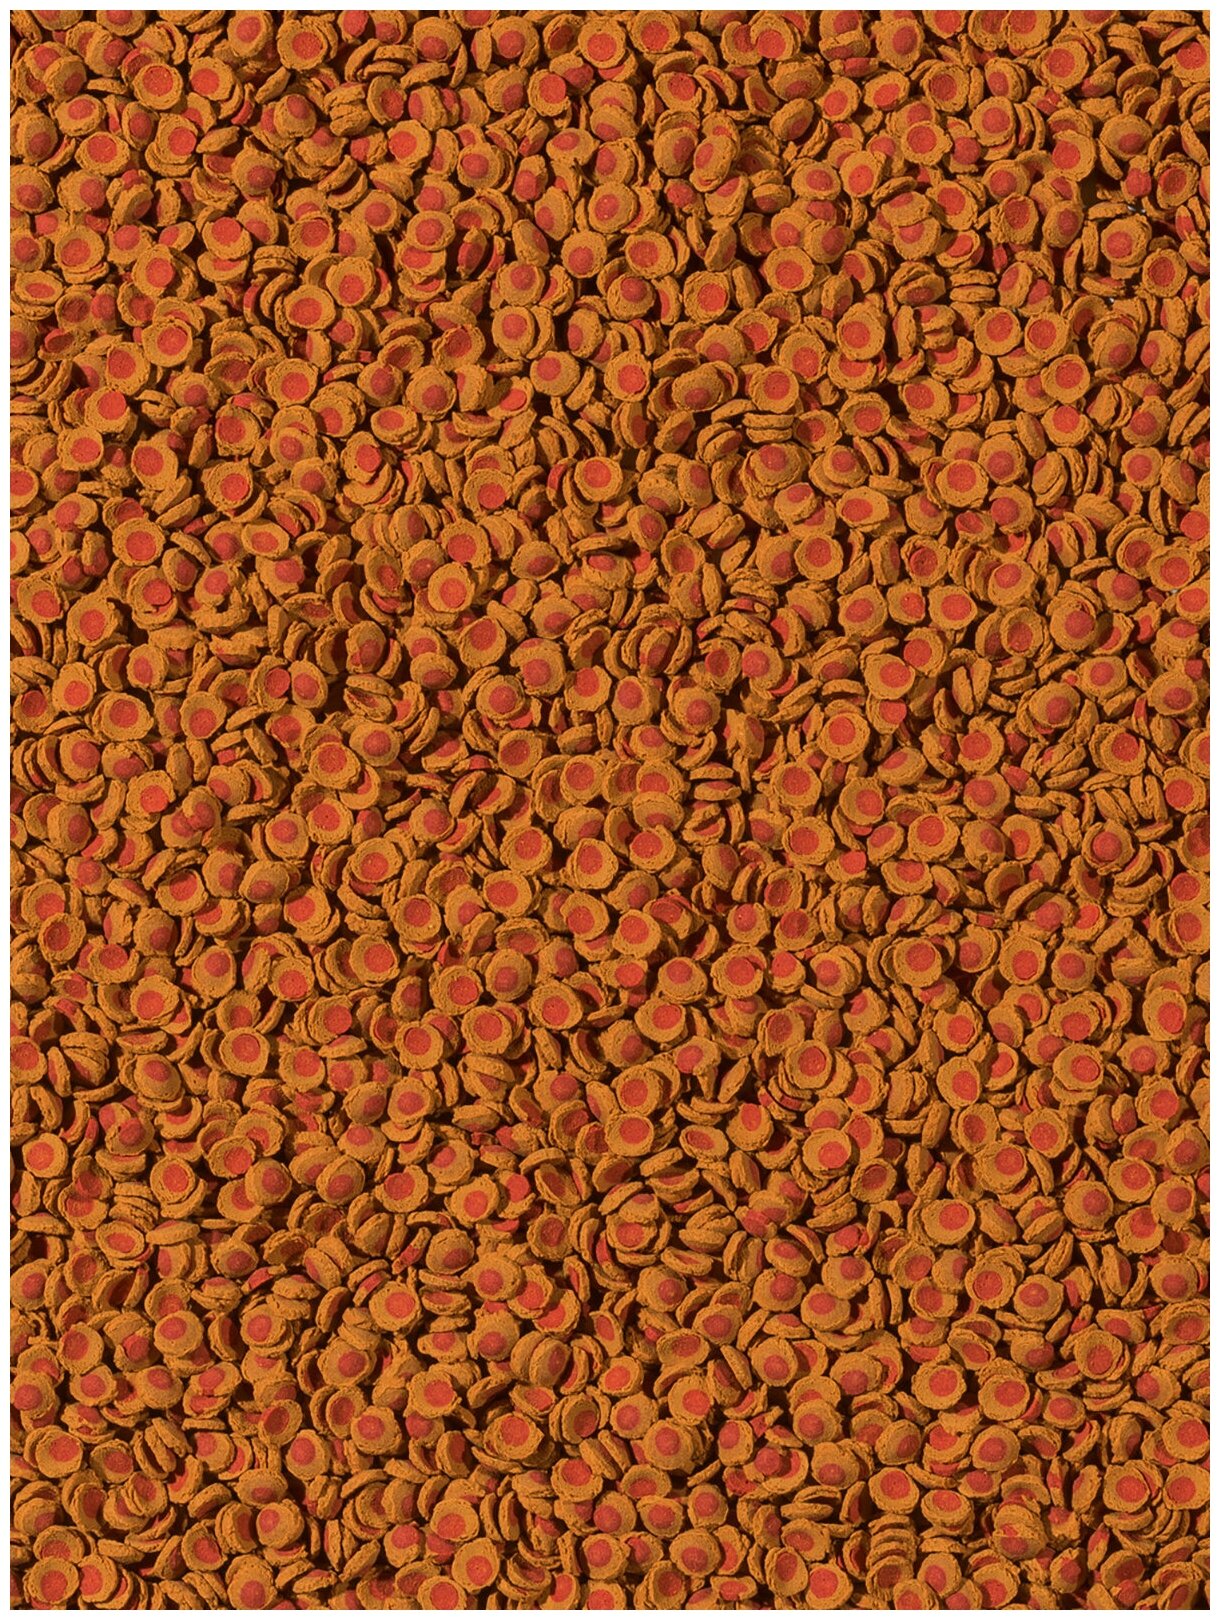 TetraCory Shrimp Wafers корм-пластинки с добавлением креветок для сомиков-коридорасов 100 мл - фотография № 8